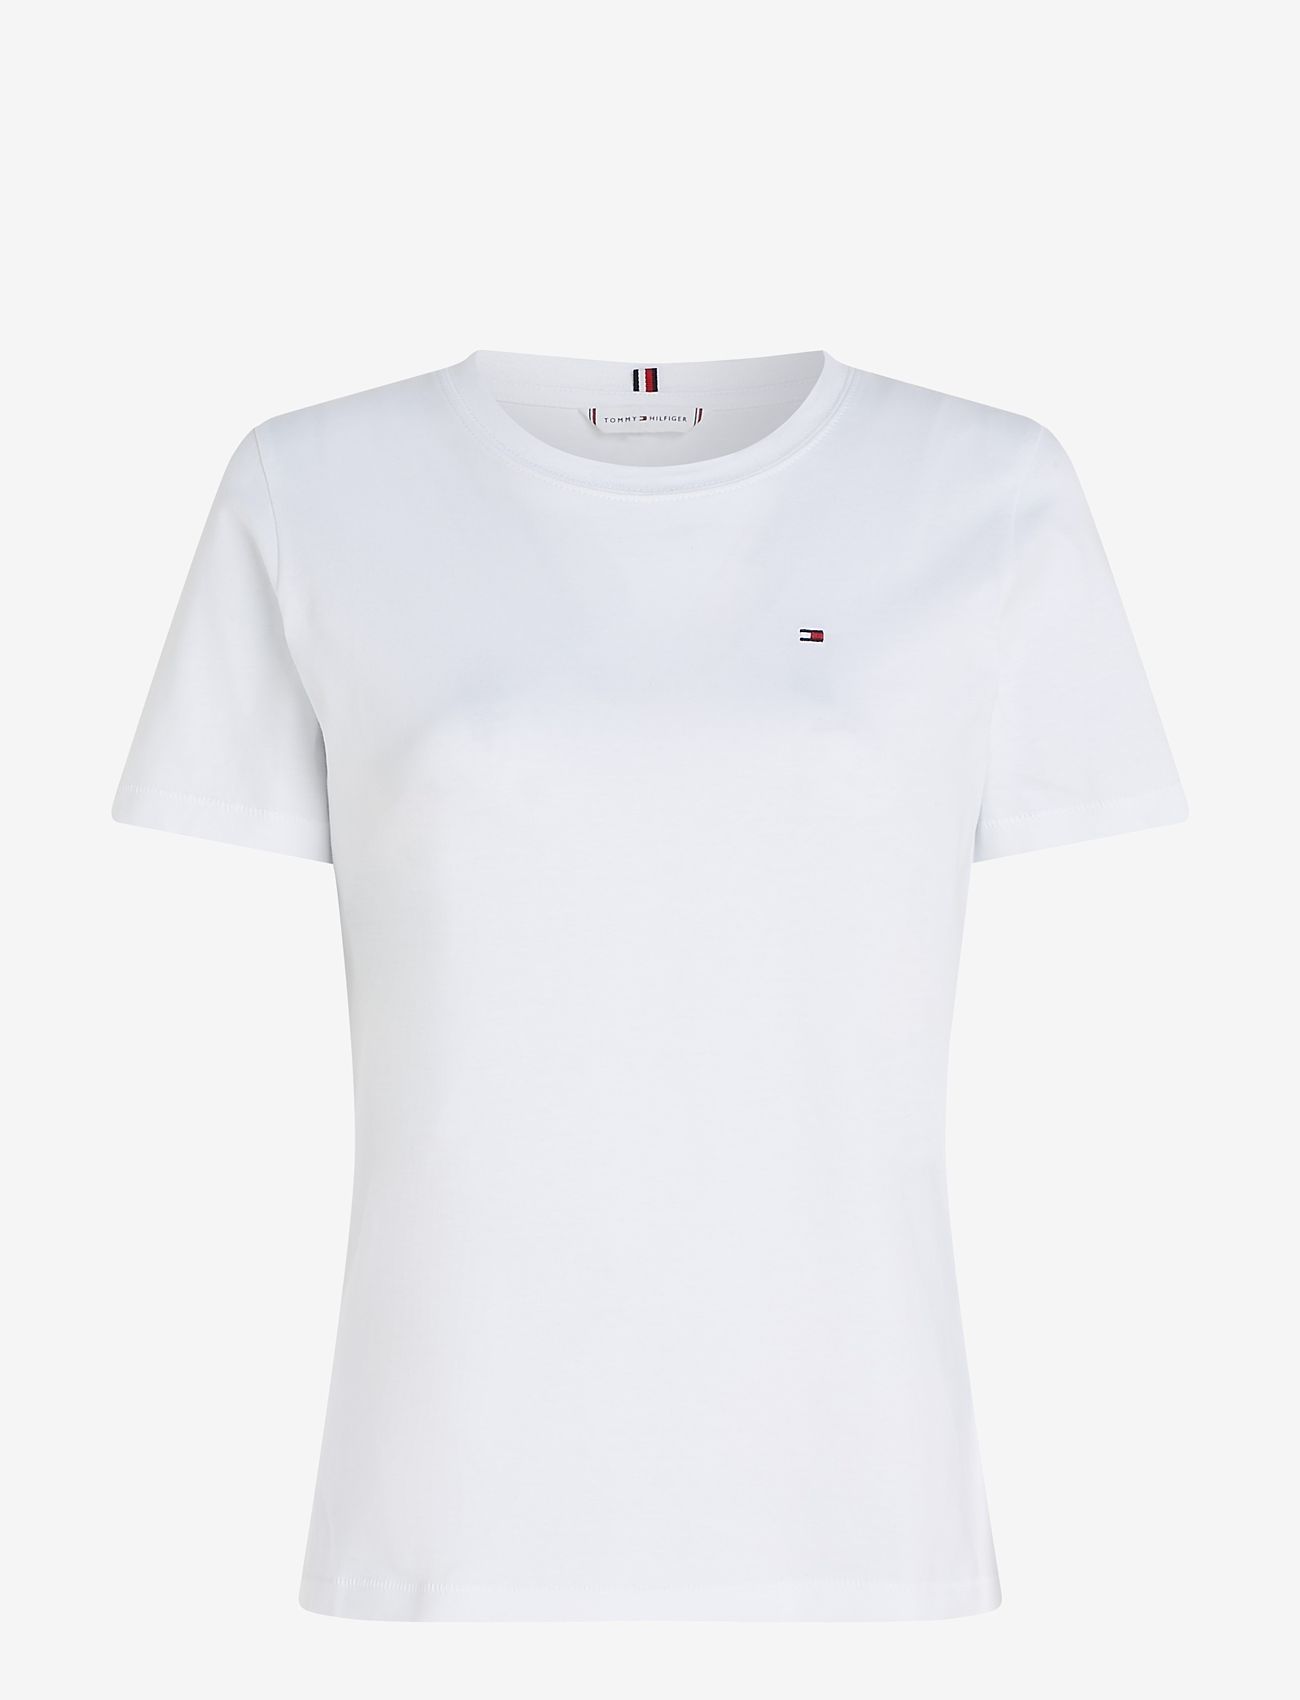 Tommy Hilfiger - MODERN REGULAR C-NK SS - t-shirts - th optic white - 1